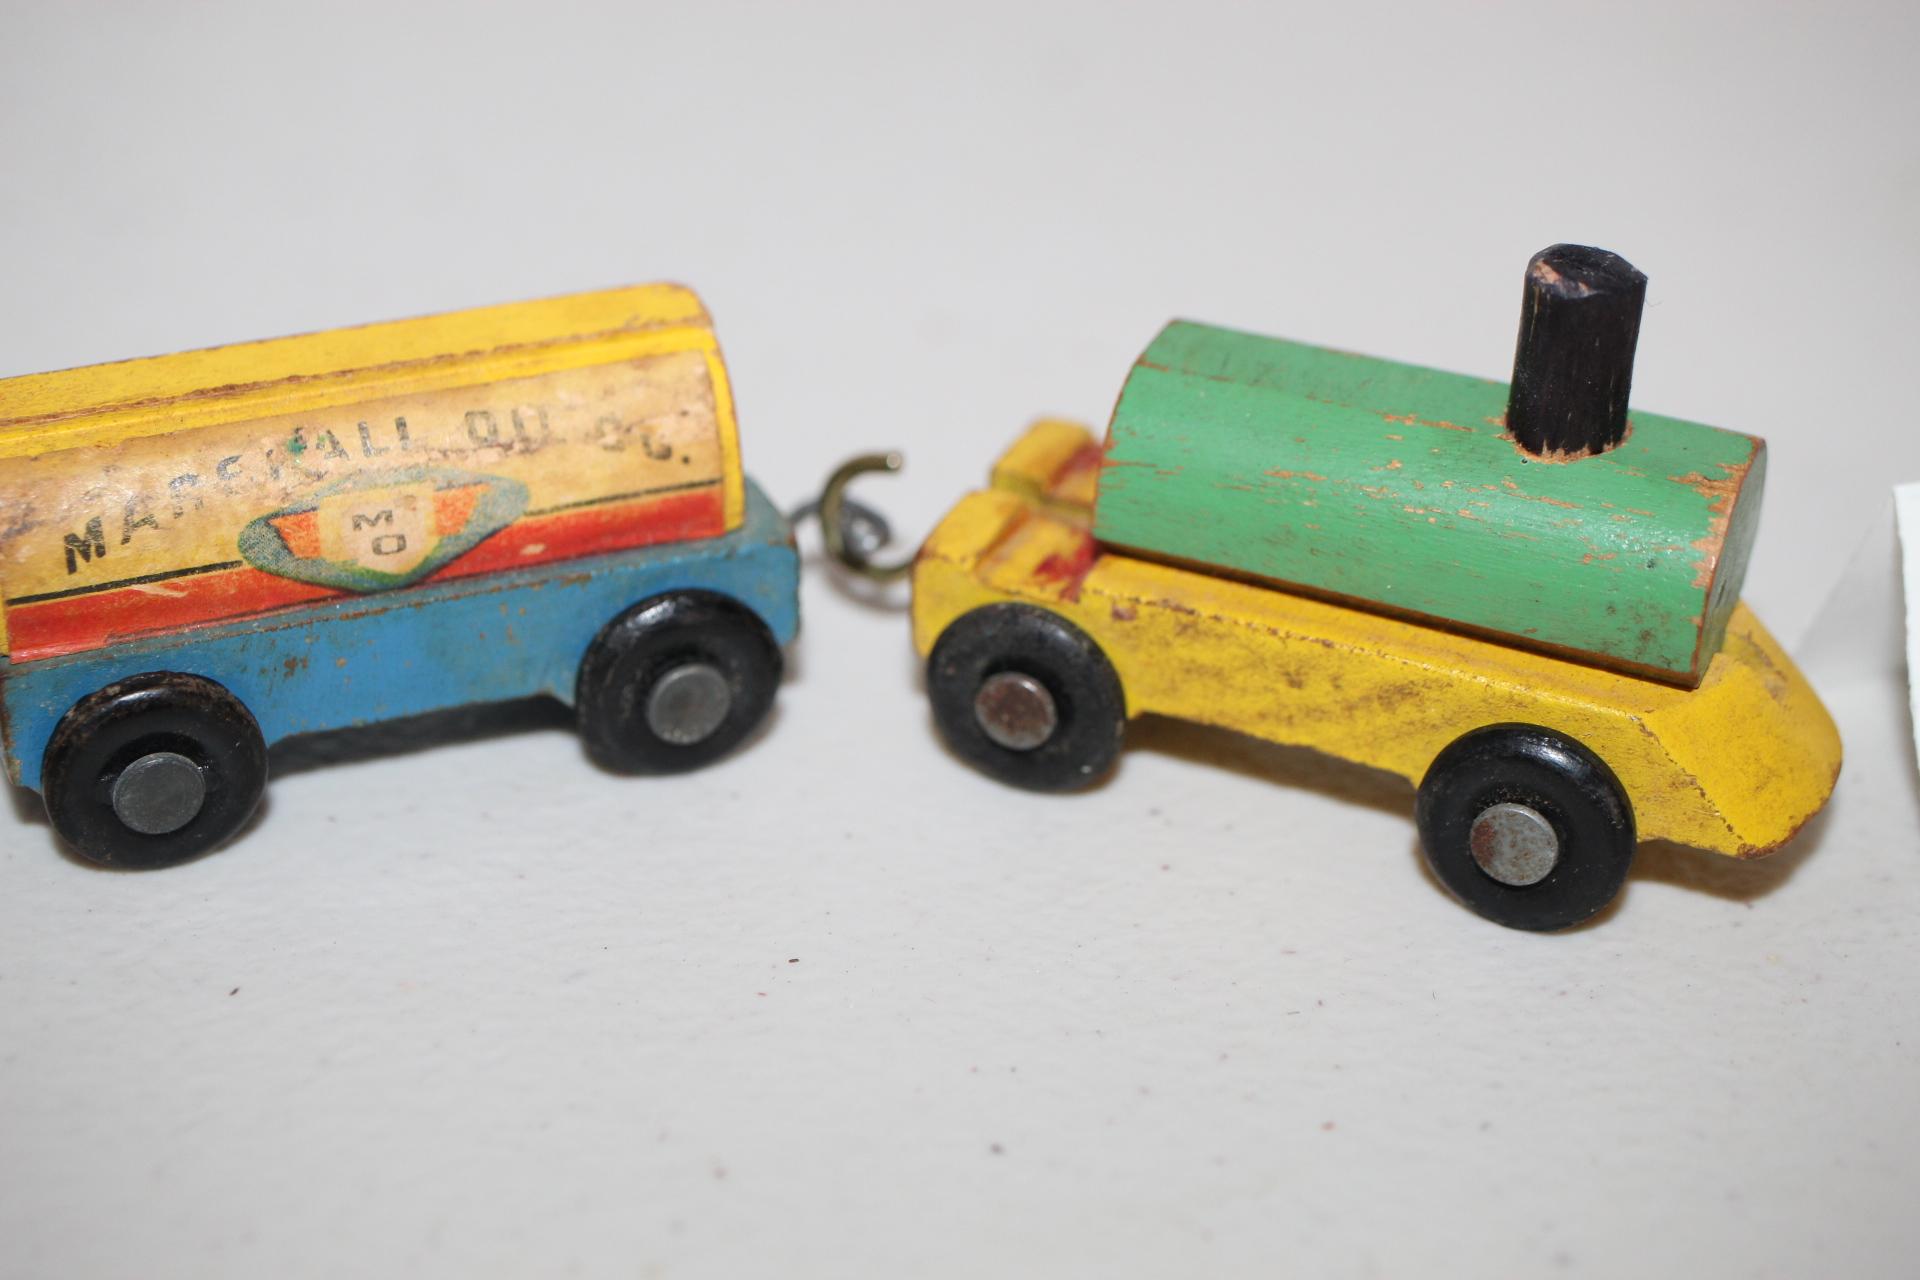 Vintage Wooden Train, Each 2 1/4" x 1 1/4"